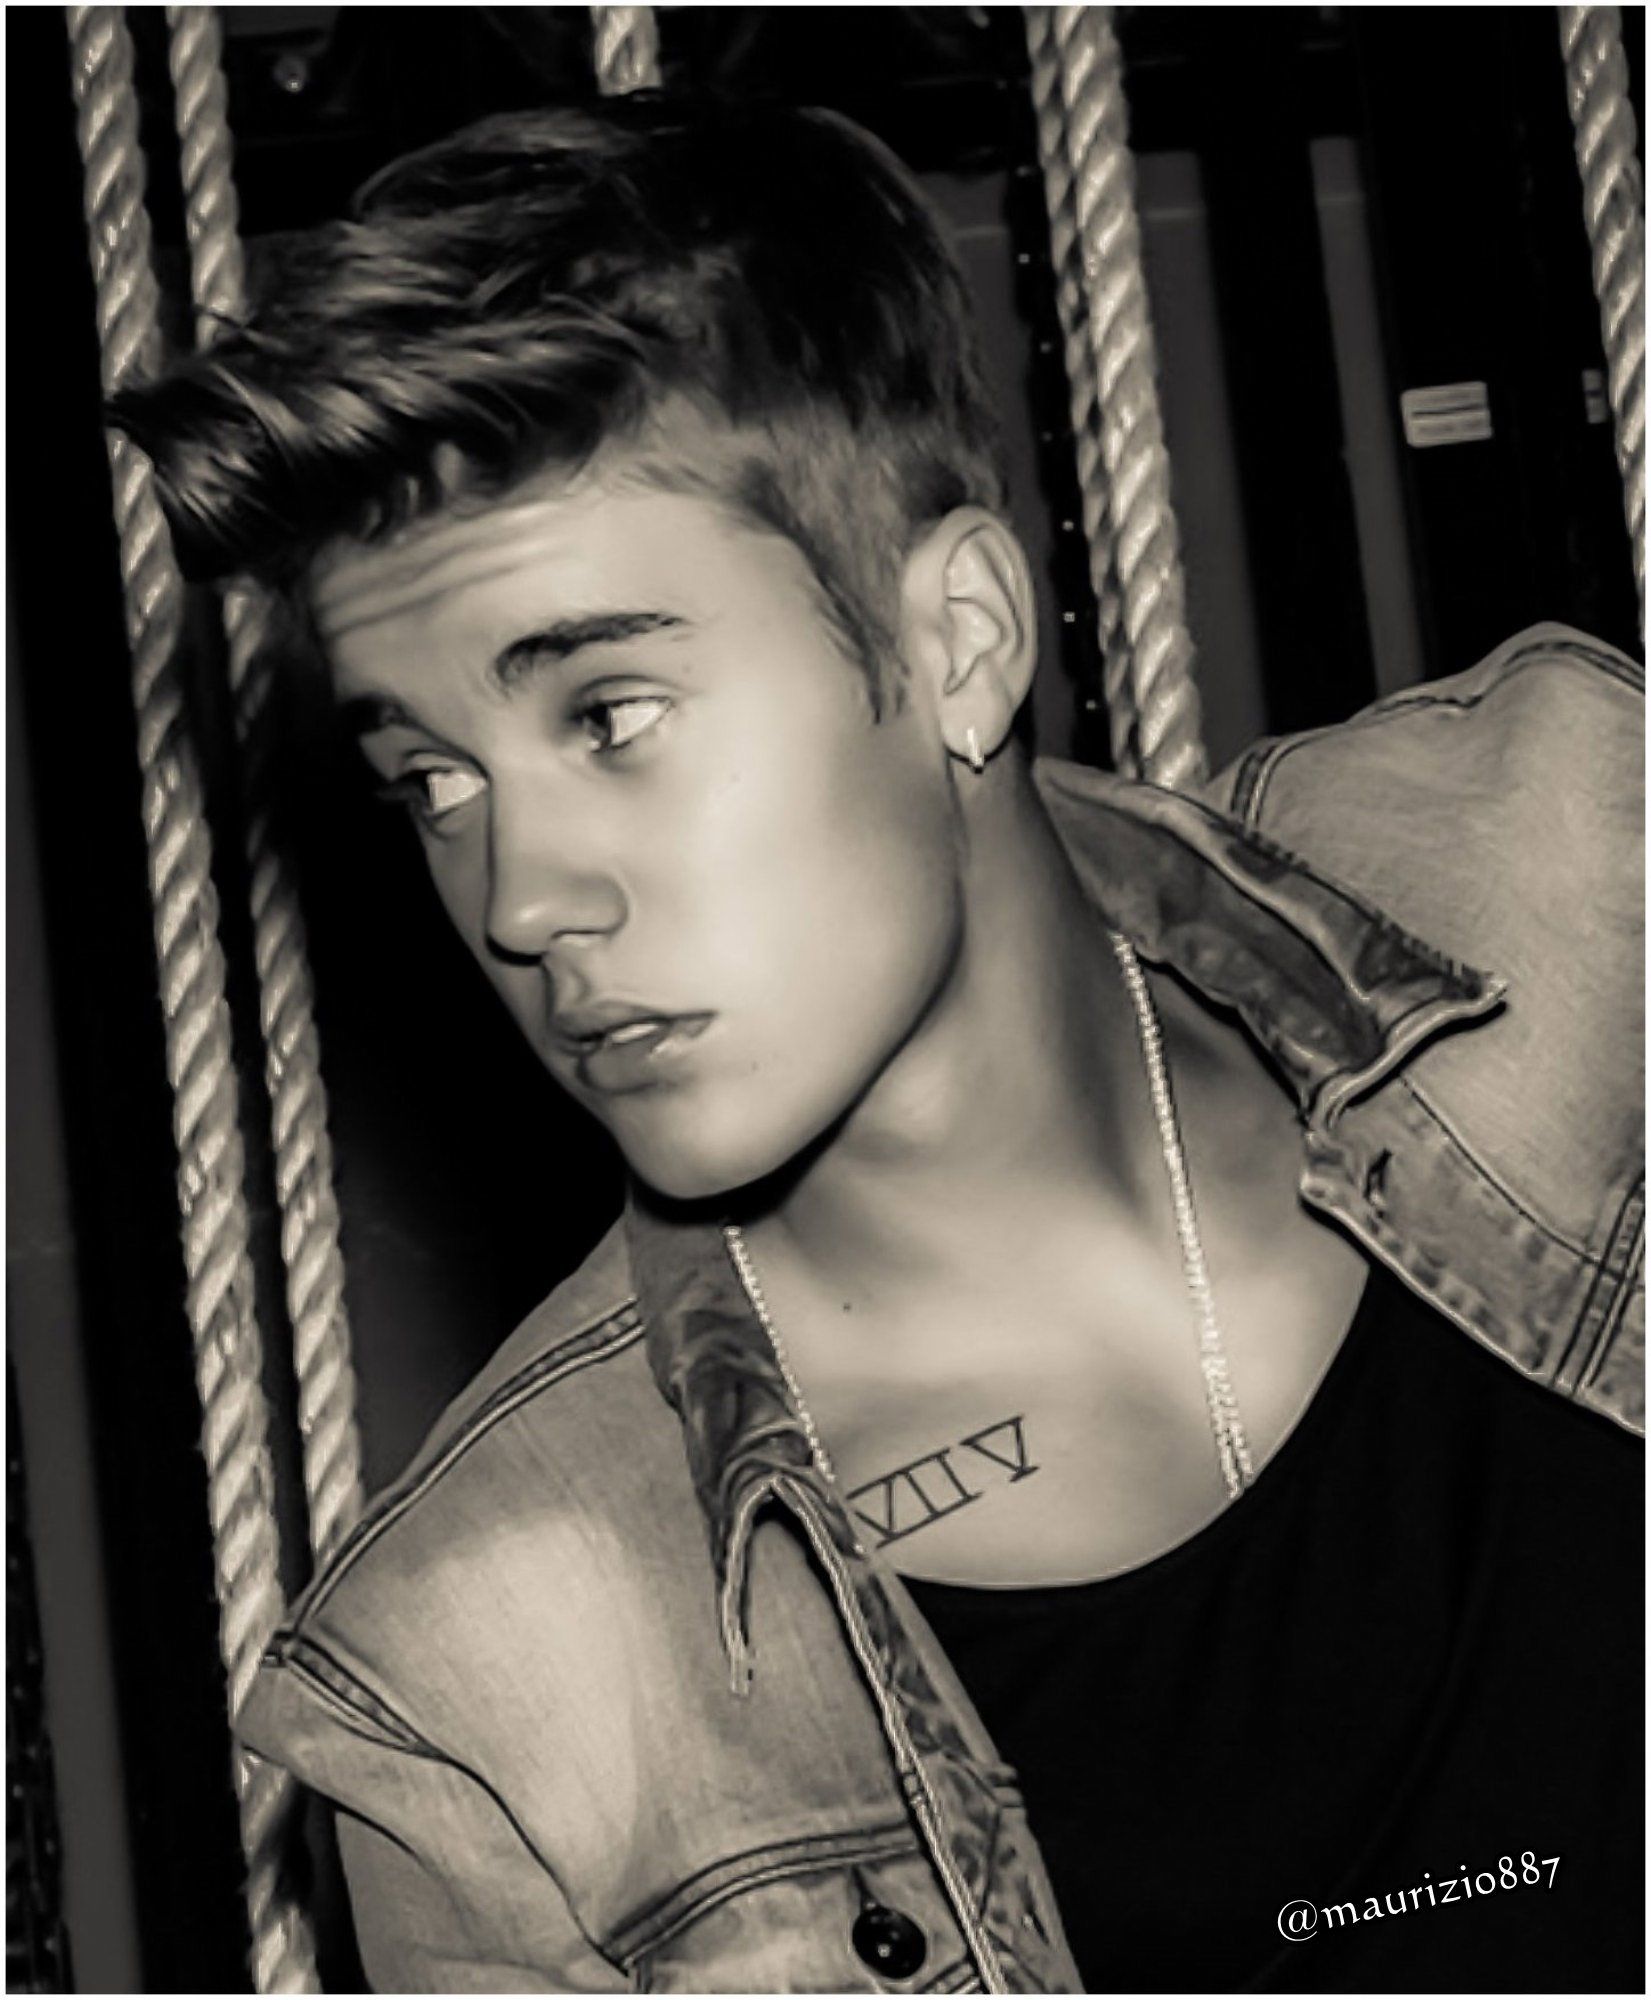 Justin Bieber Pic 2014 Wallpapers